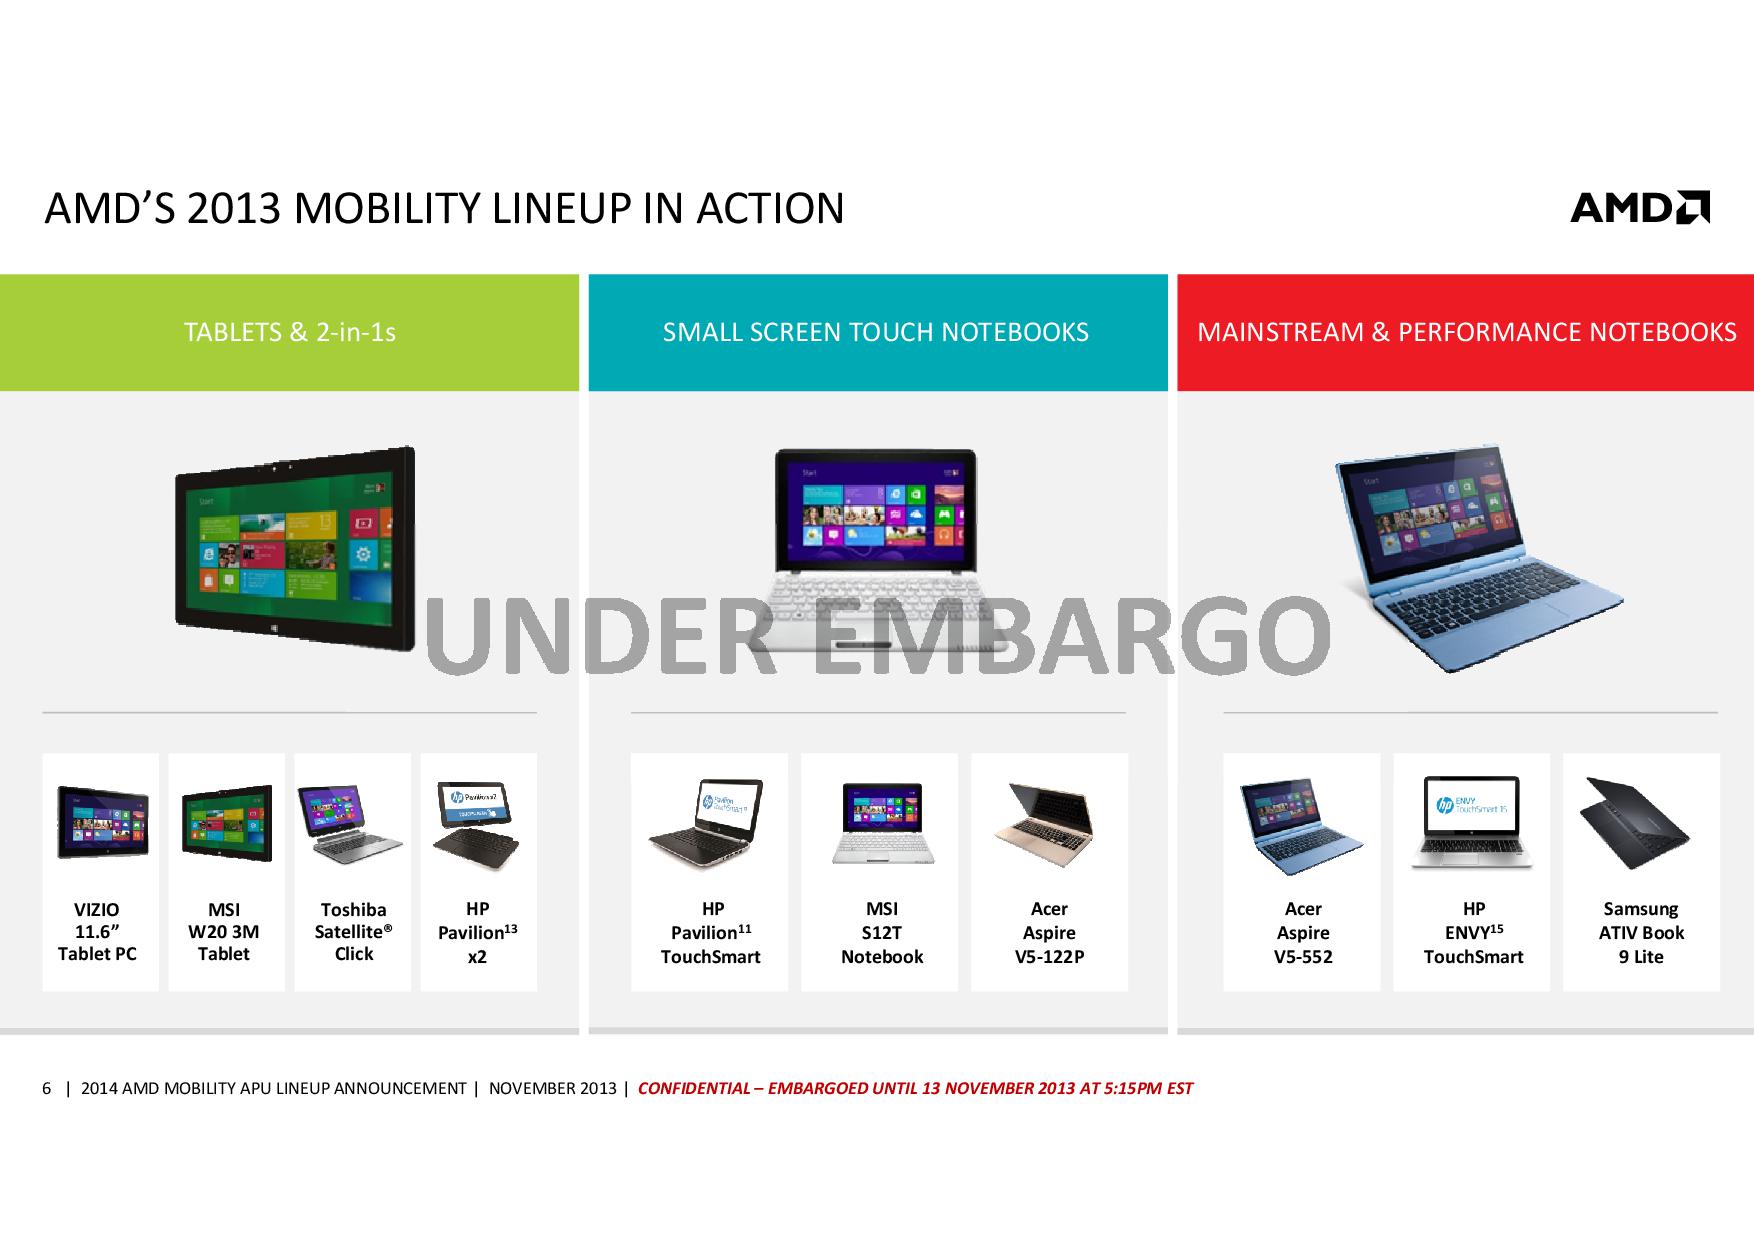 AMD Mobility APU Lineup Announcement Press Deck-006